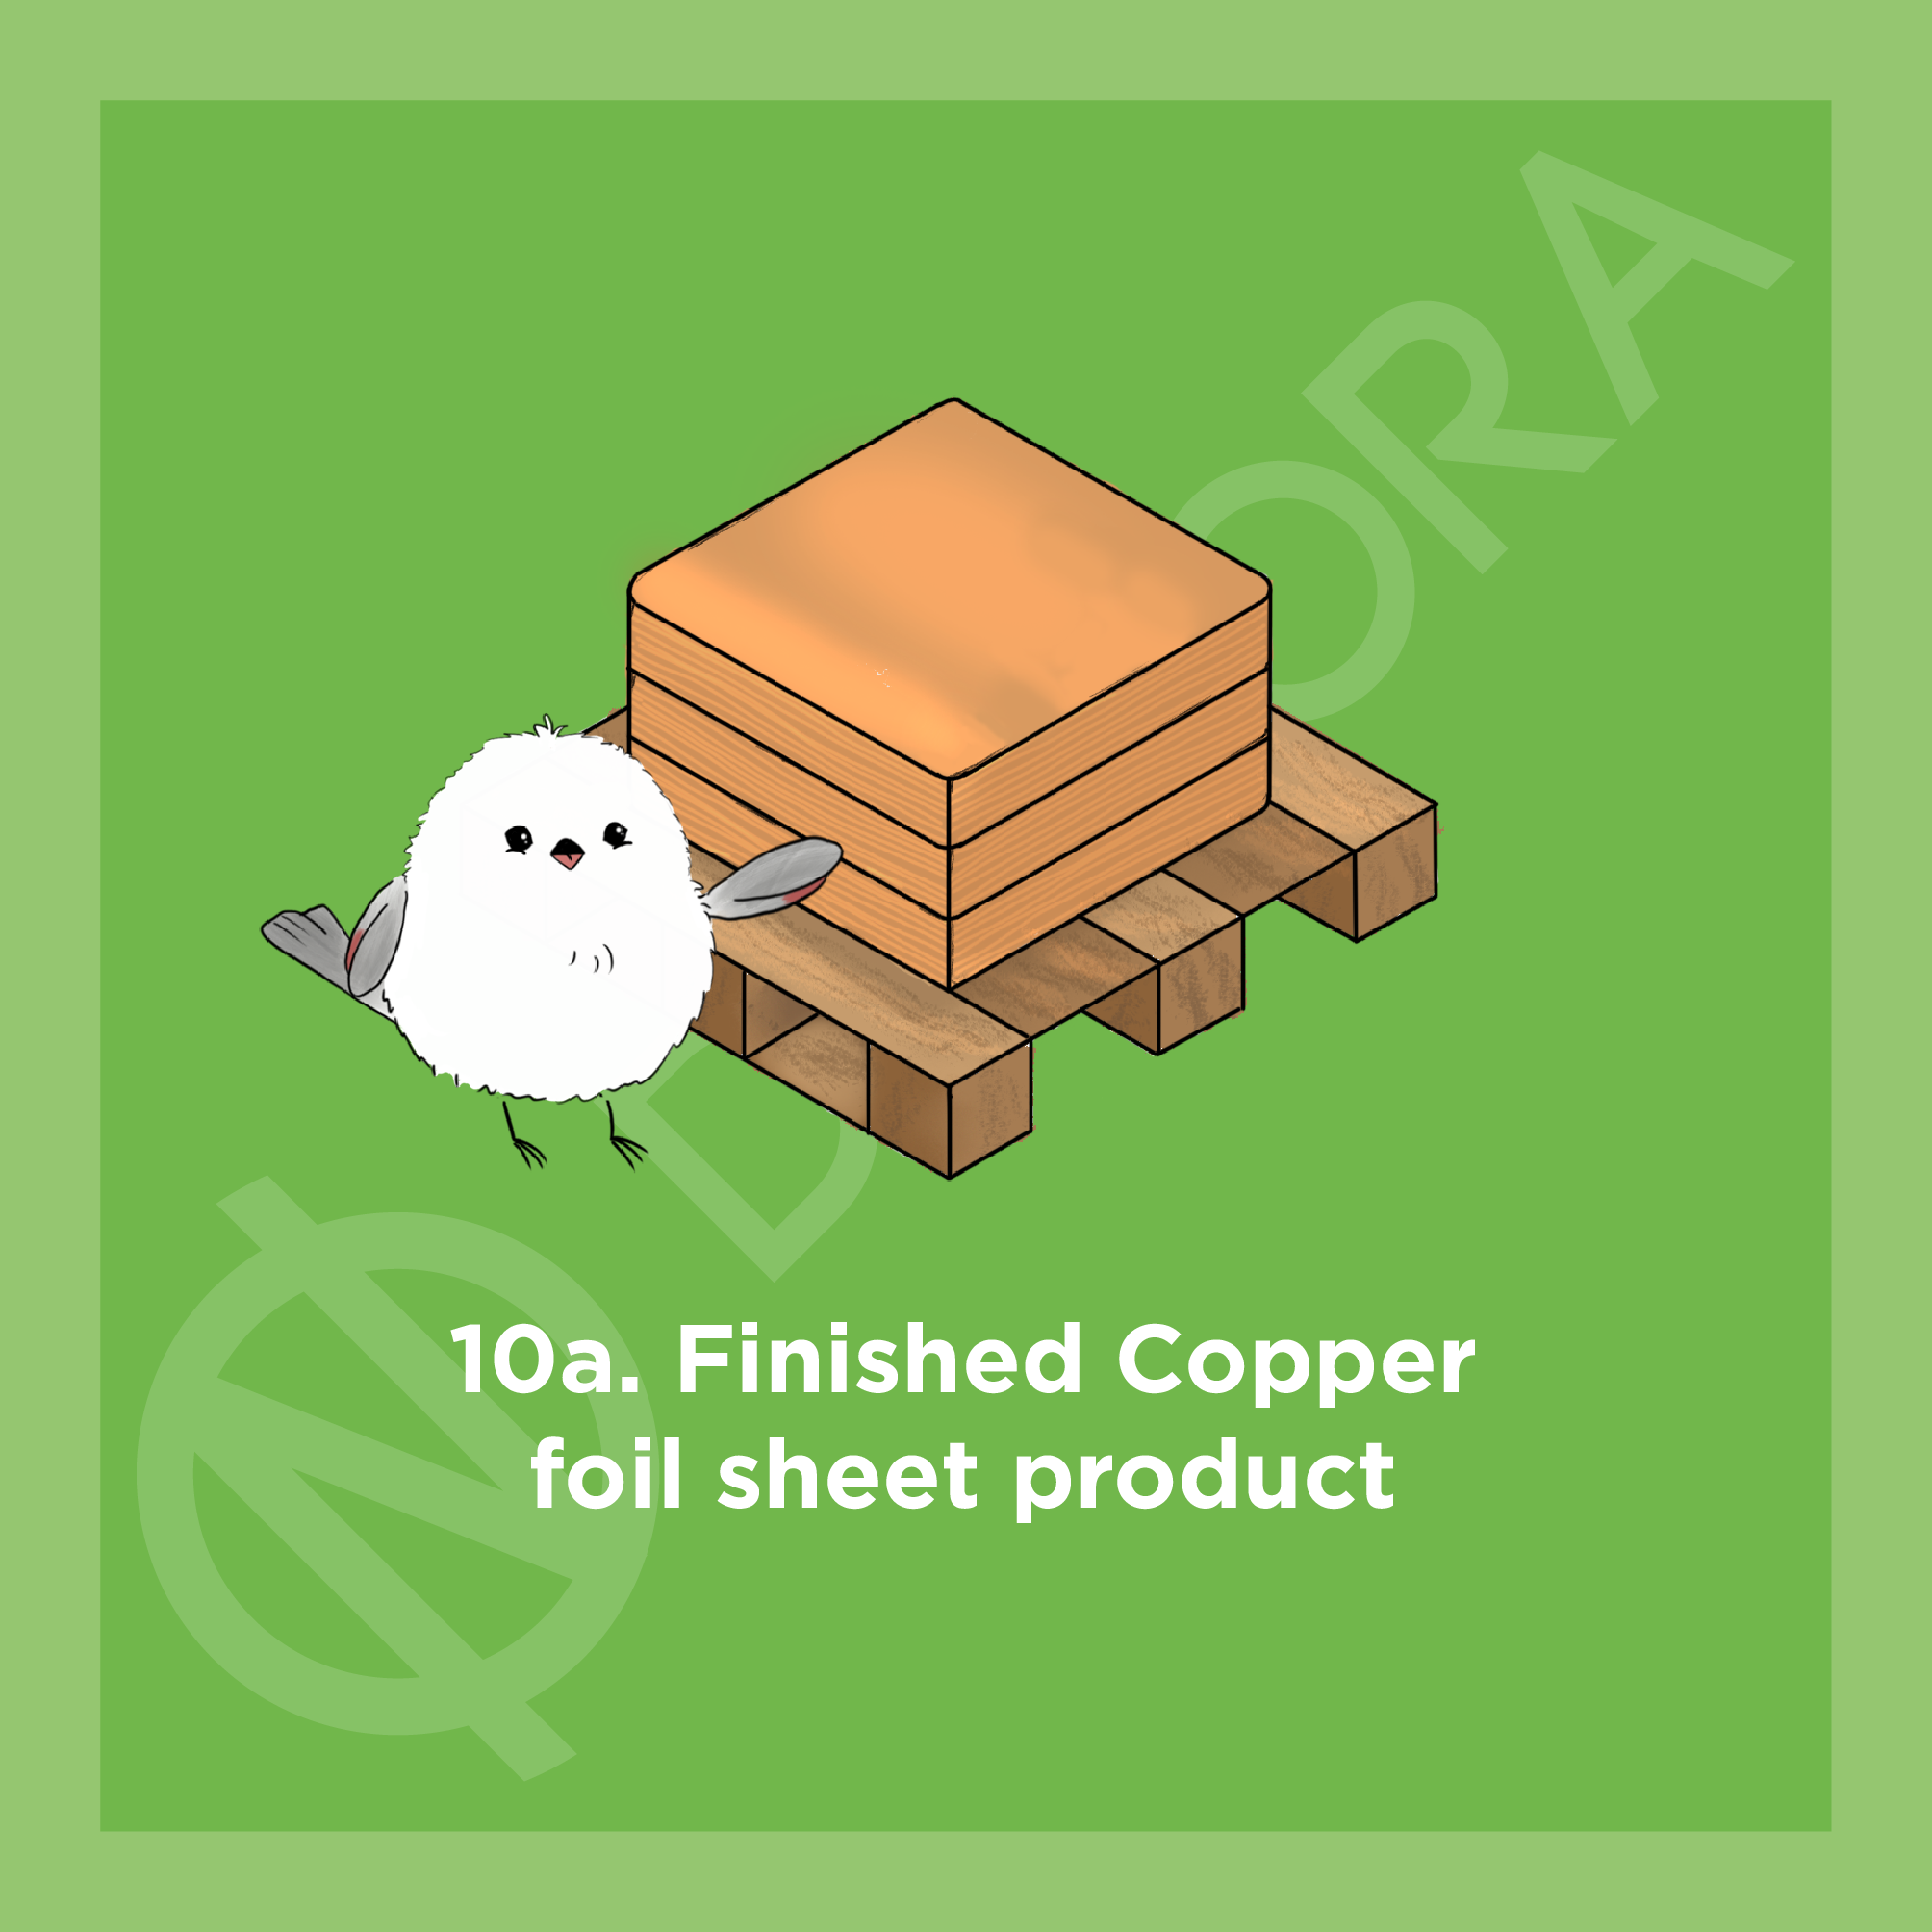 DeNora Copper foil manufacturing Step10a - Finished Copper foil sheet product